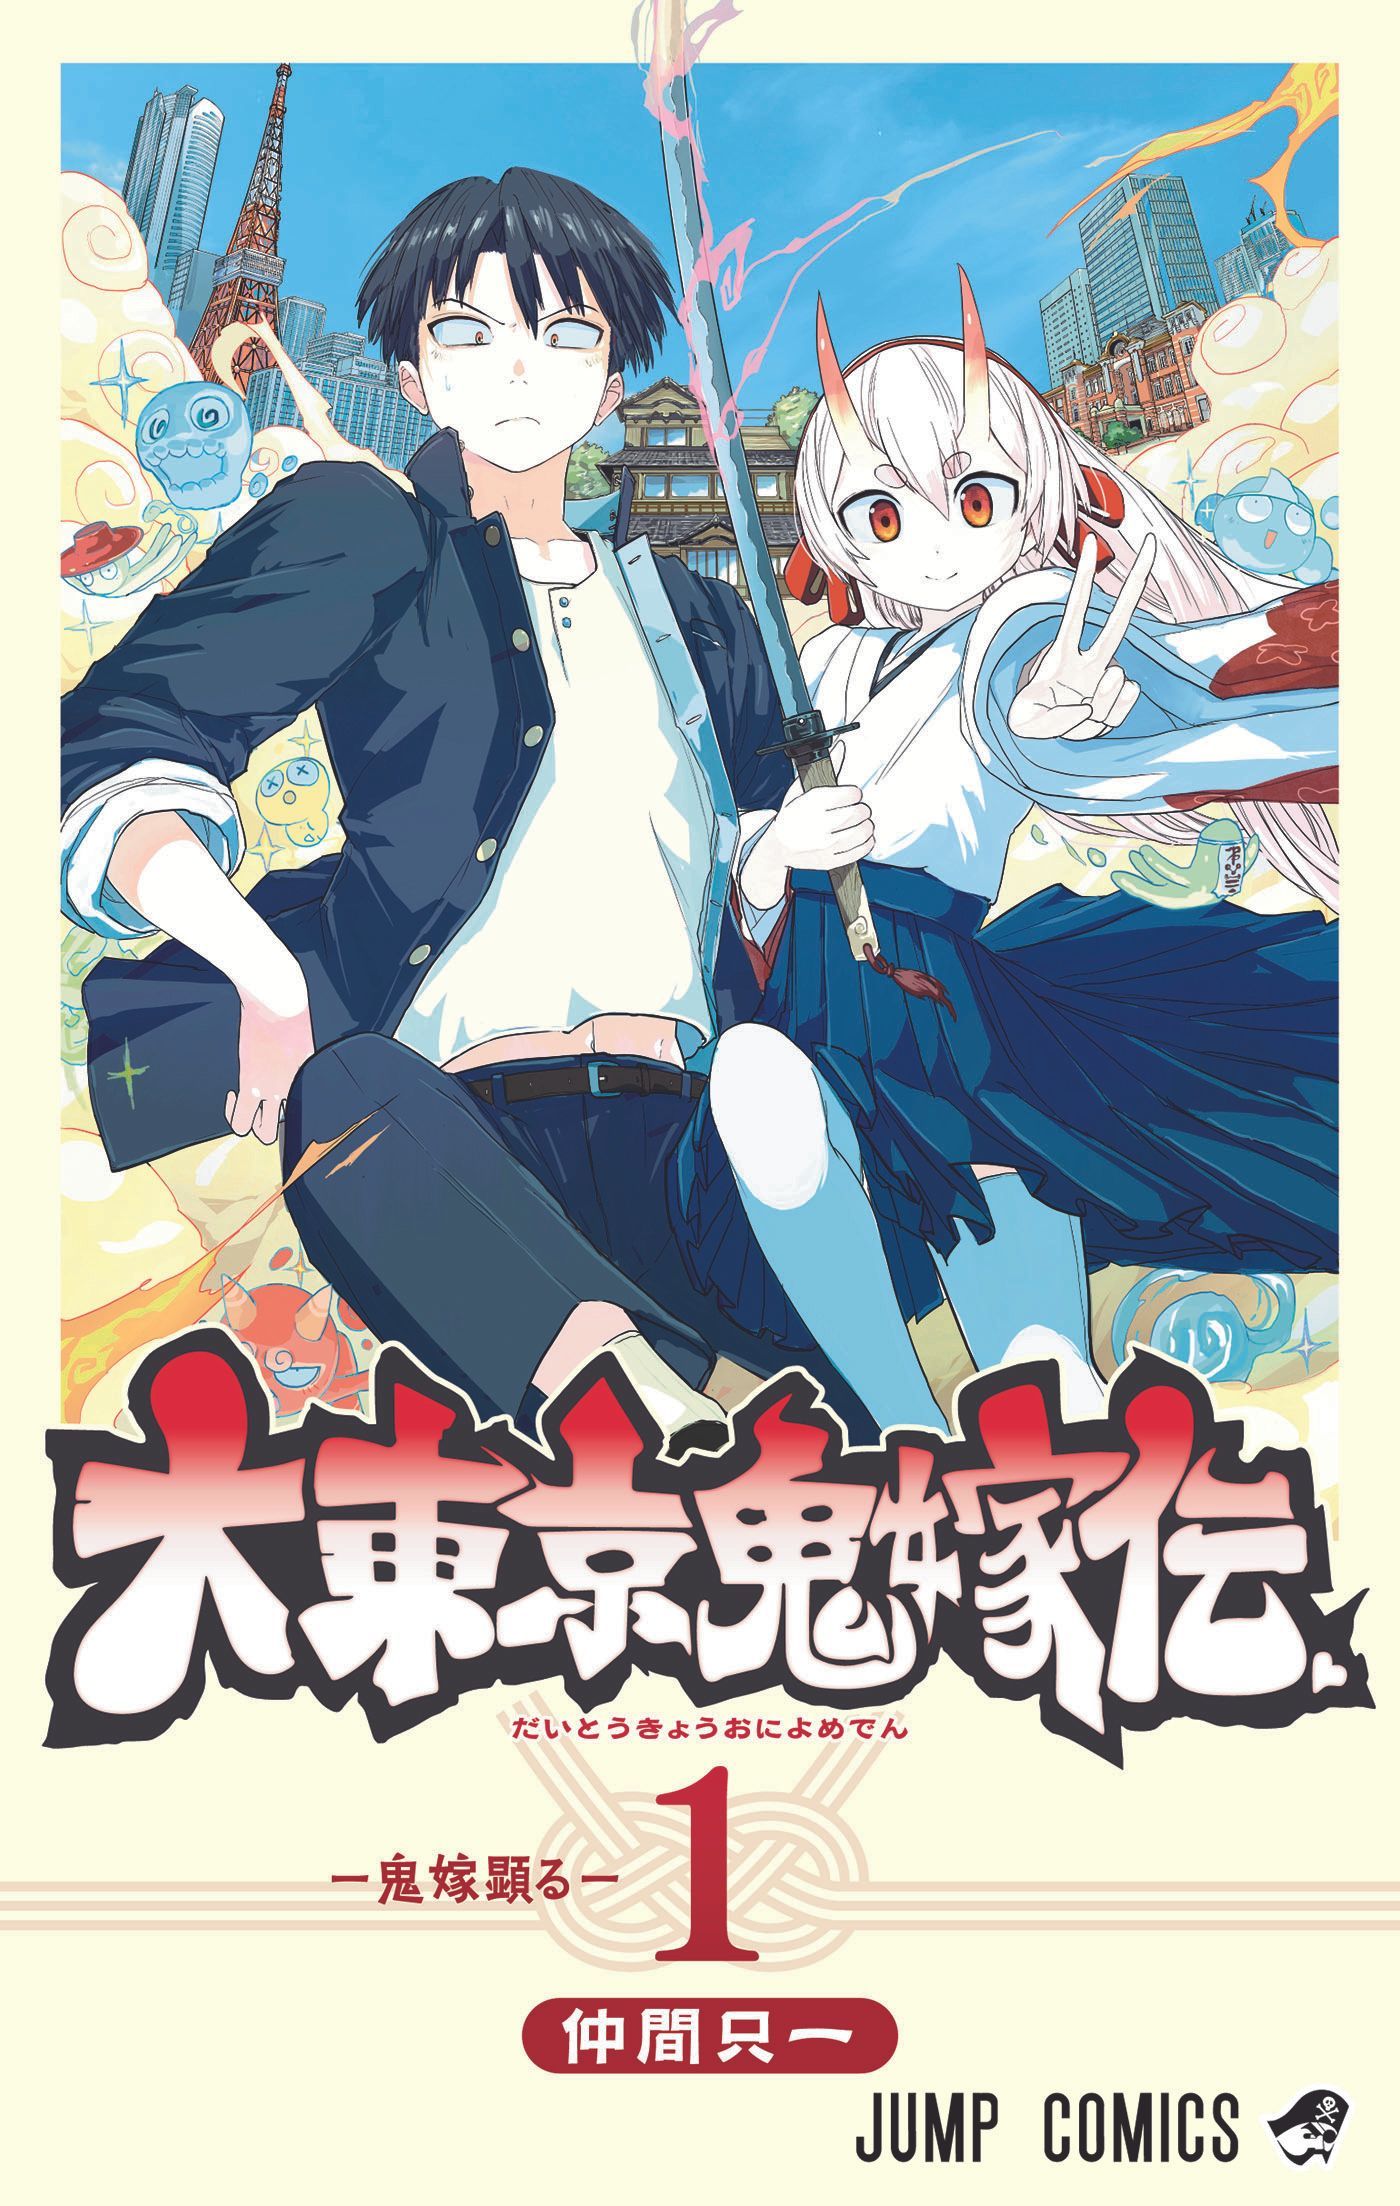 tokyo demon bride story manga volume one cover